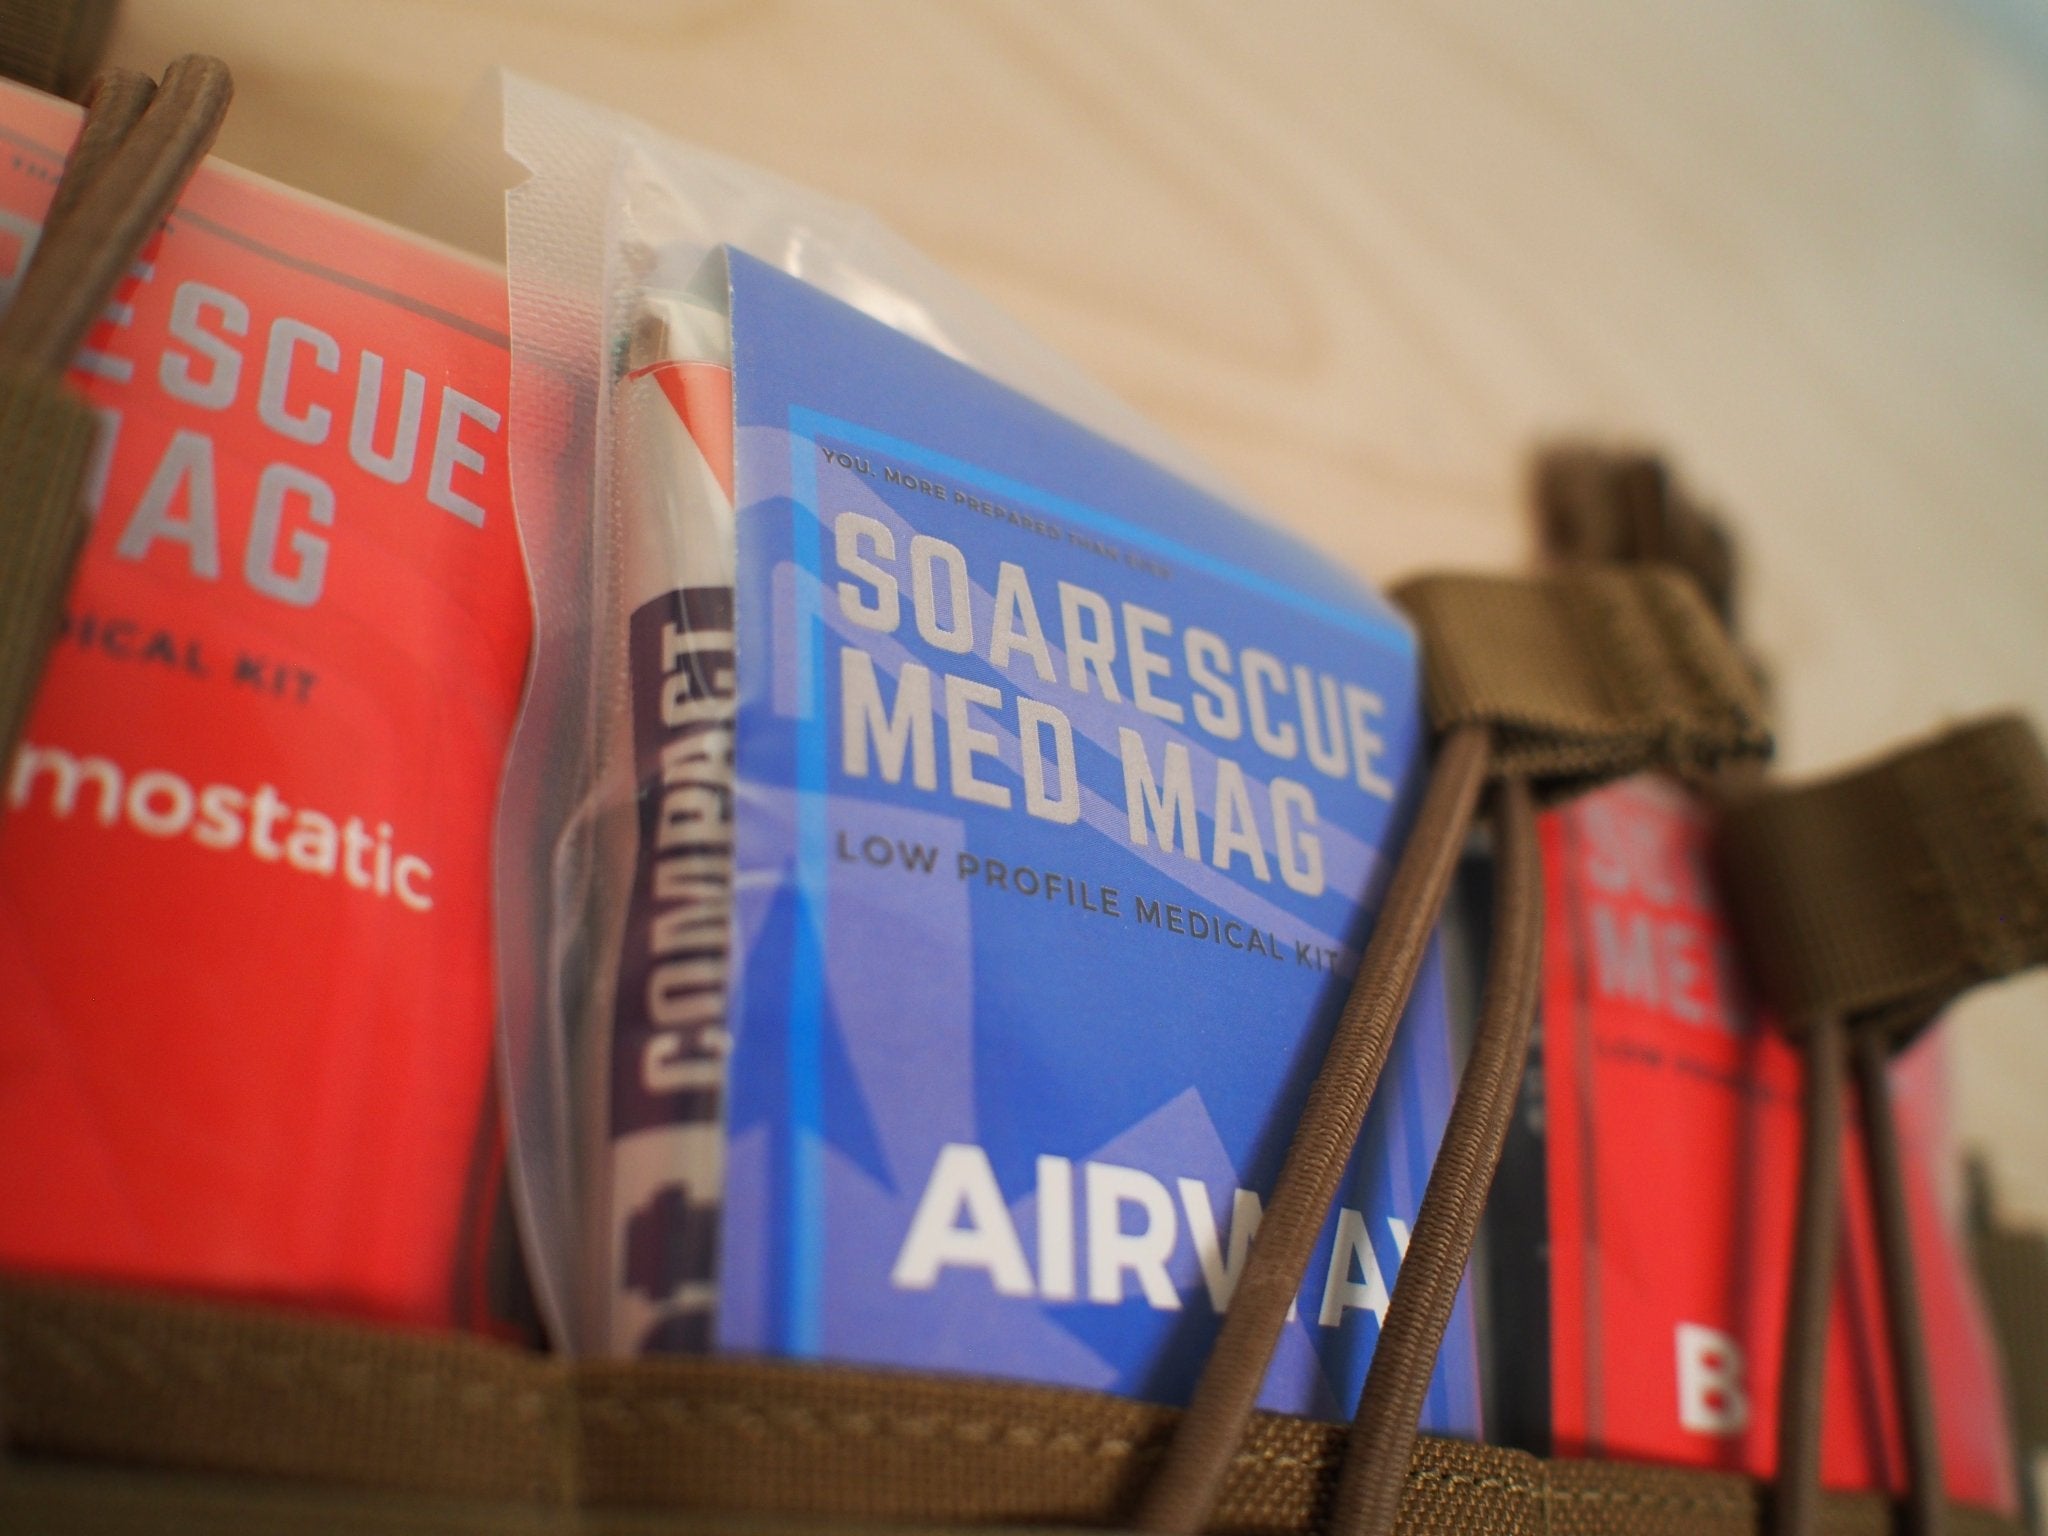 Basic Airway + Respiratory MedMag - SOARescue